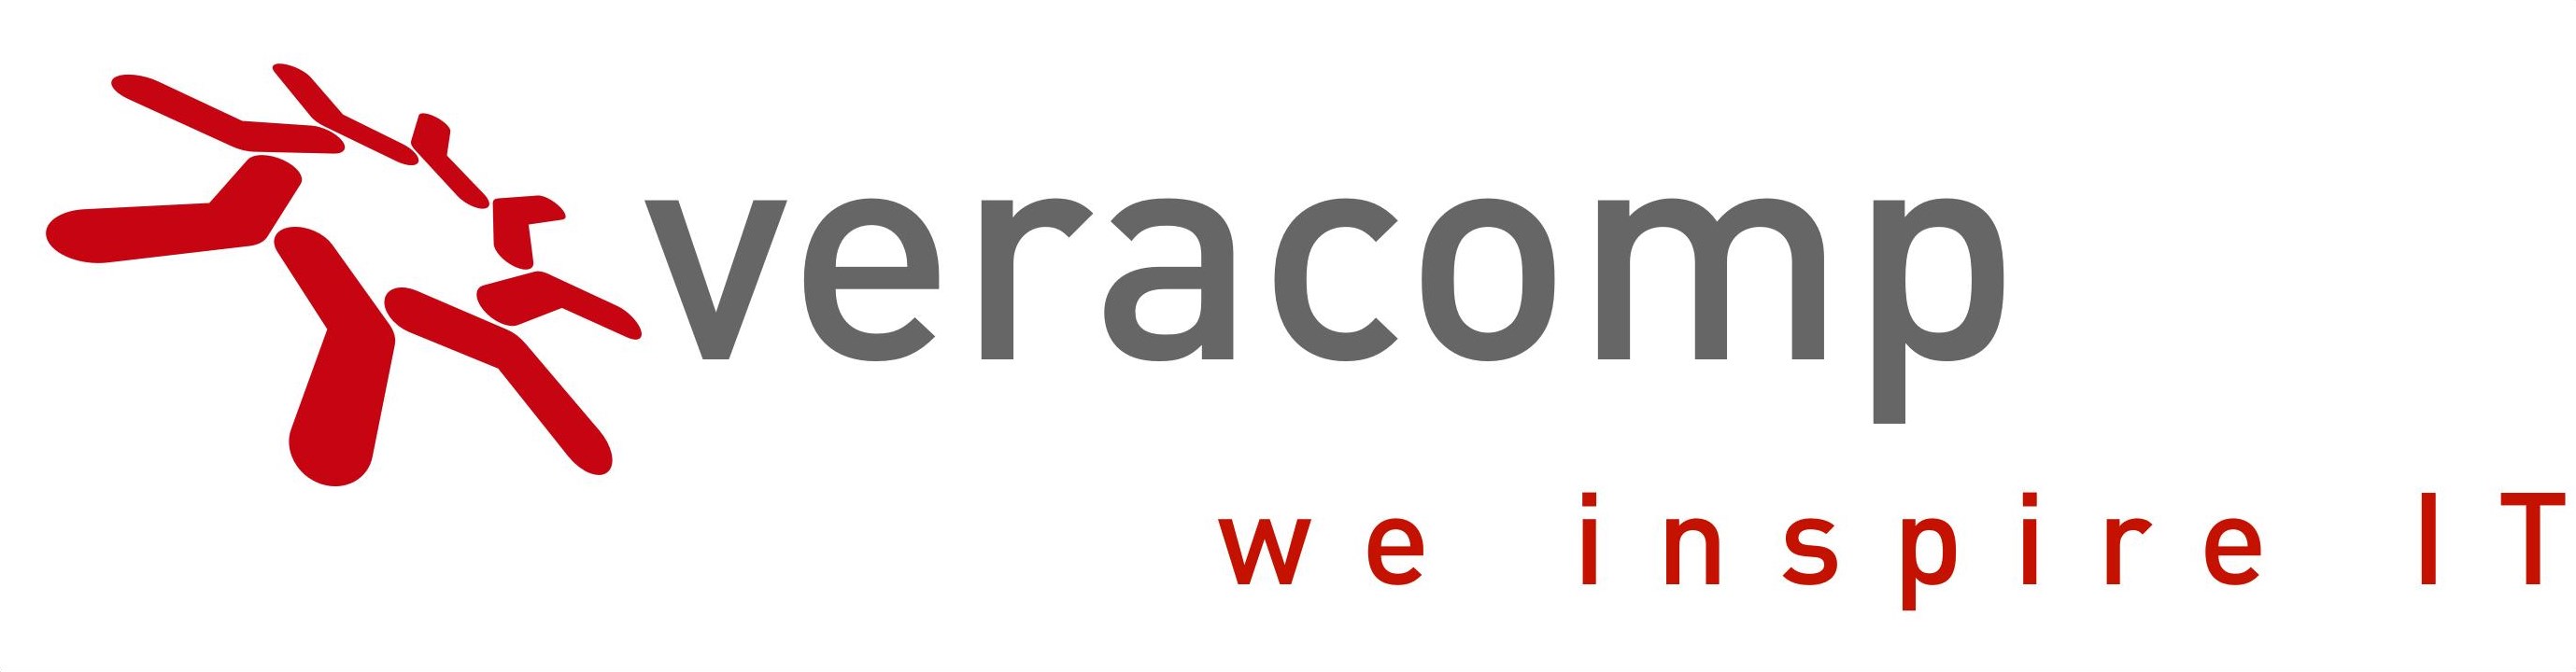 logo Veracomp2